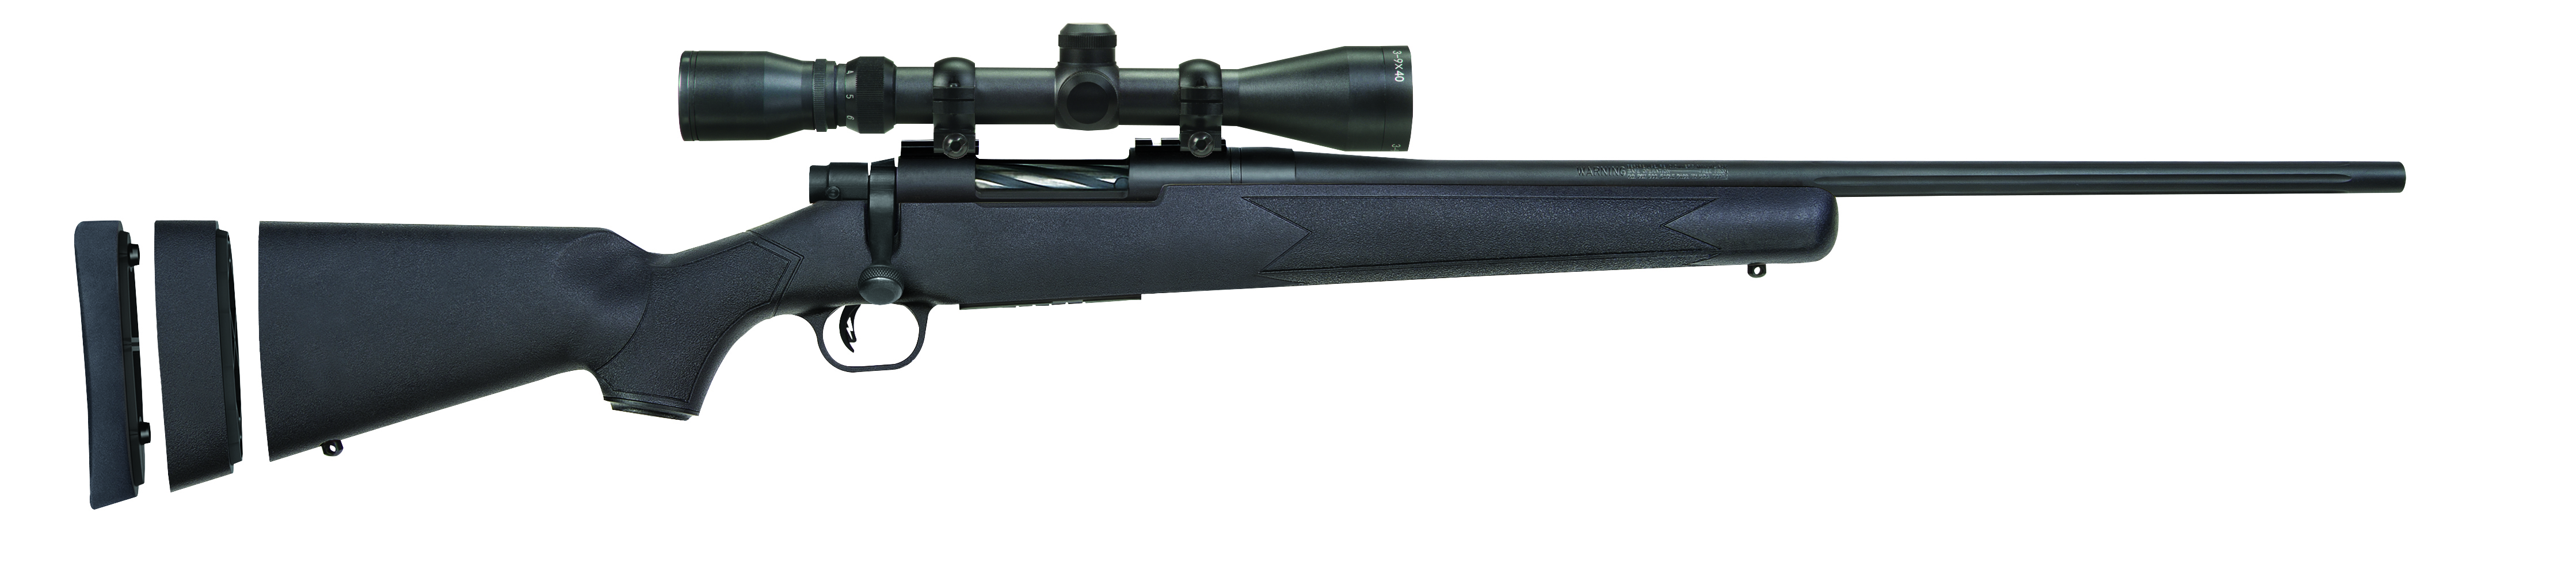 Mossberg 27867 Patriot Youth Bolt Action Rifle 308 WIN, RH, 20 in, Blue, Syn Stk, 5+1 Rnd, LBA Adj Trgr (163752), 0902-1262